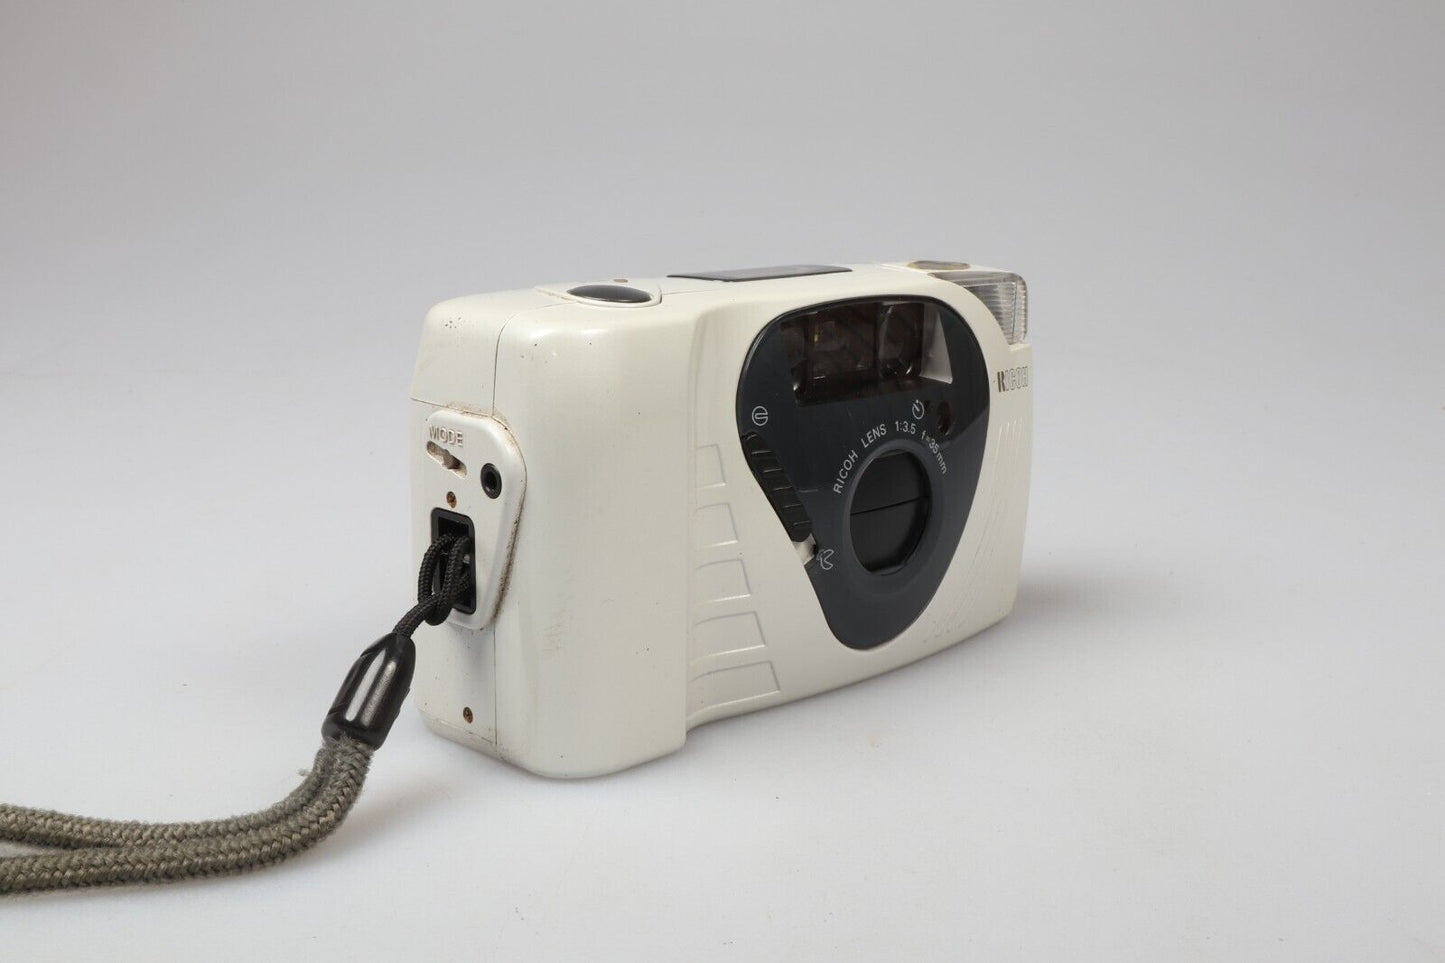 Ricoh FF-9 | 35mm Point & Shoot Film Camera | White